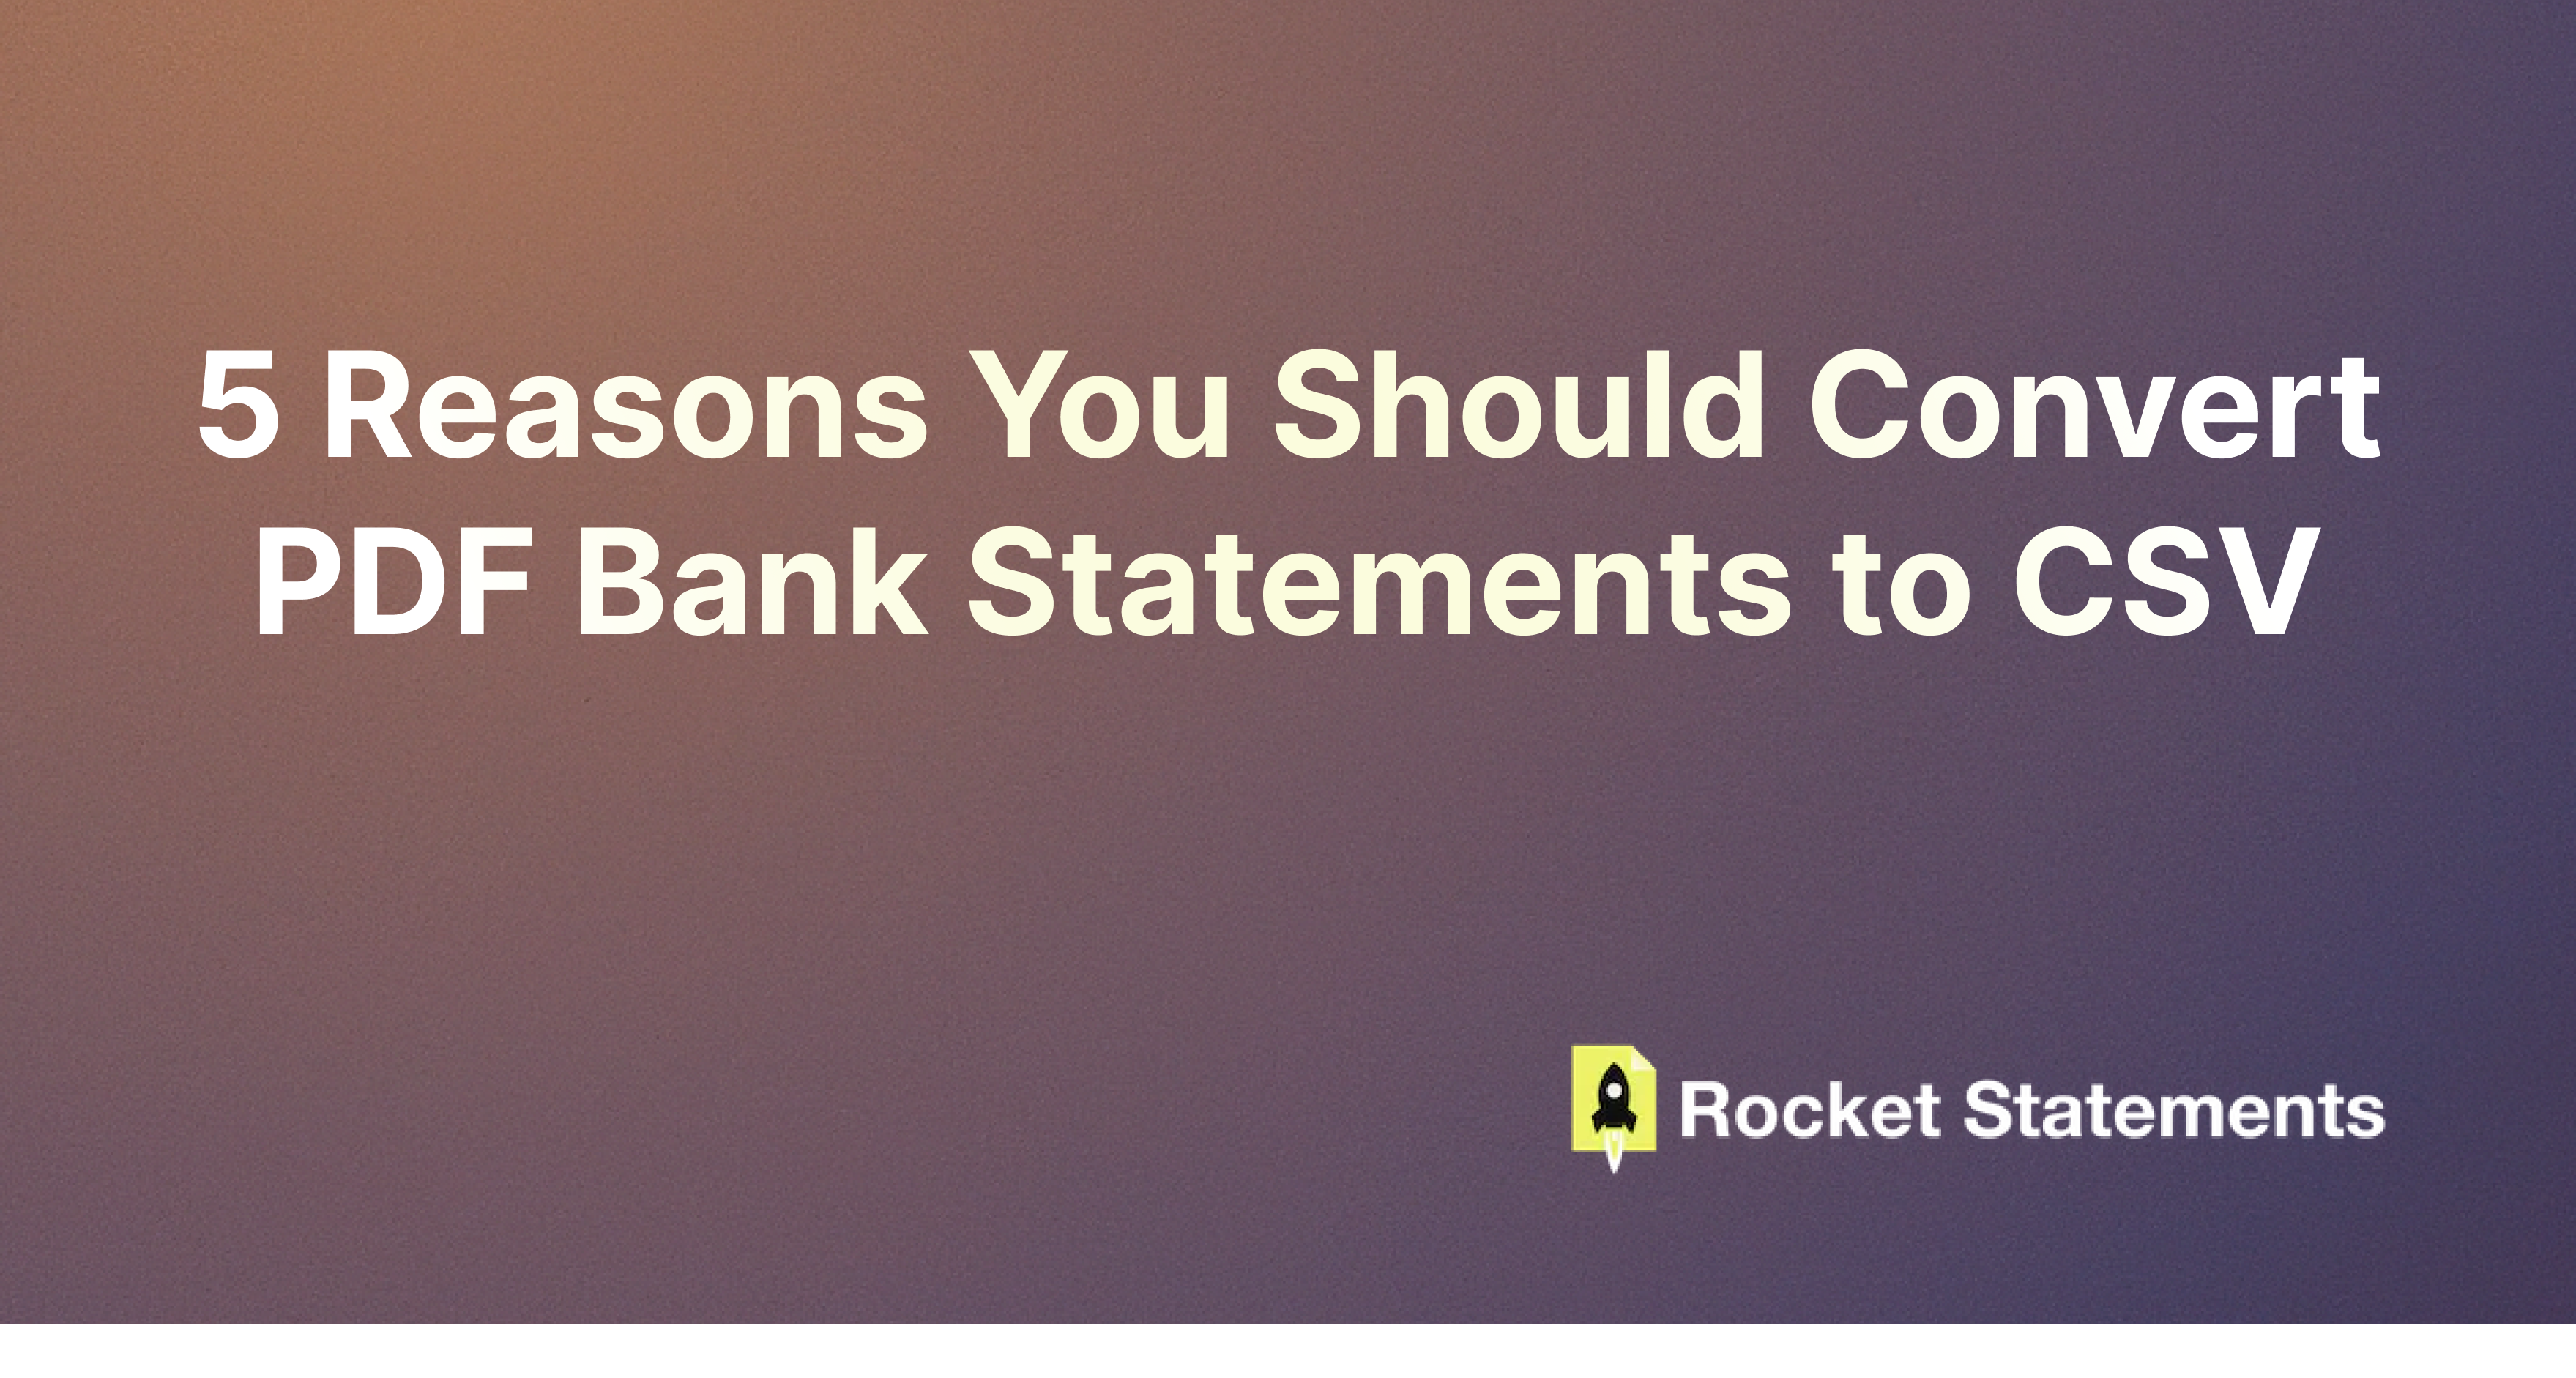 5 Reasons You Should Convert PDF Bank Statements to CSV